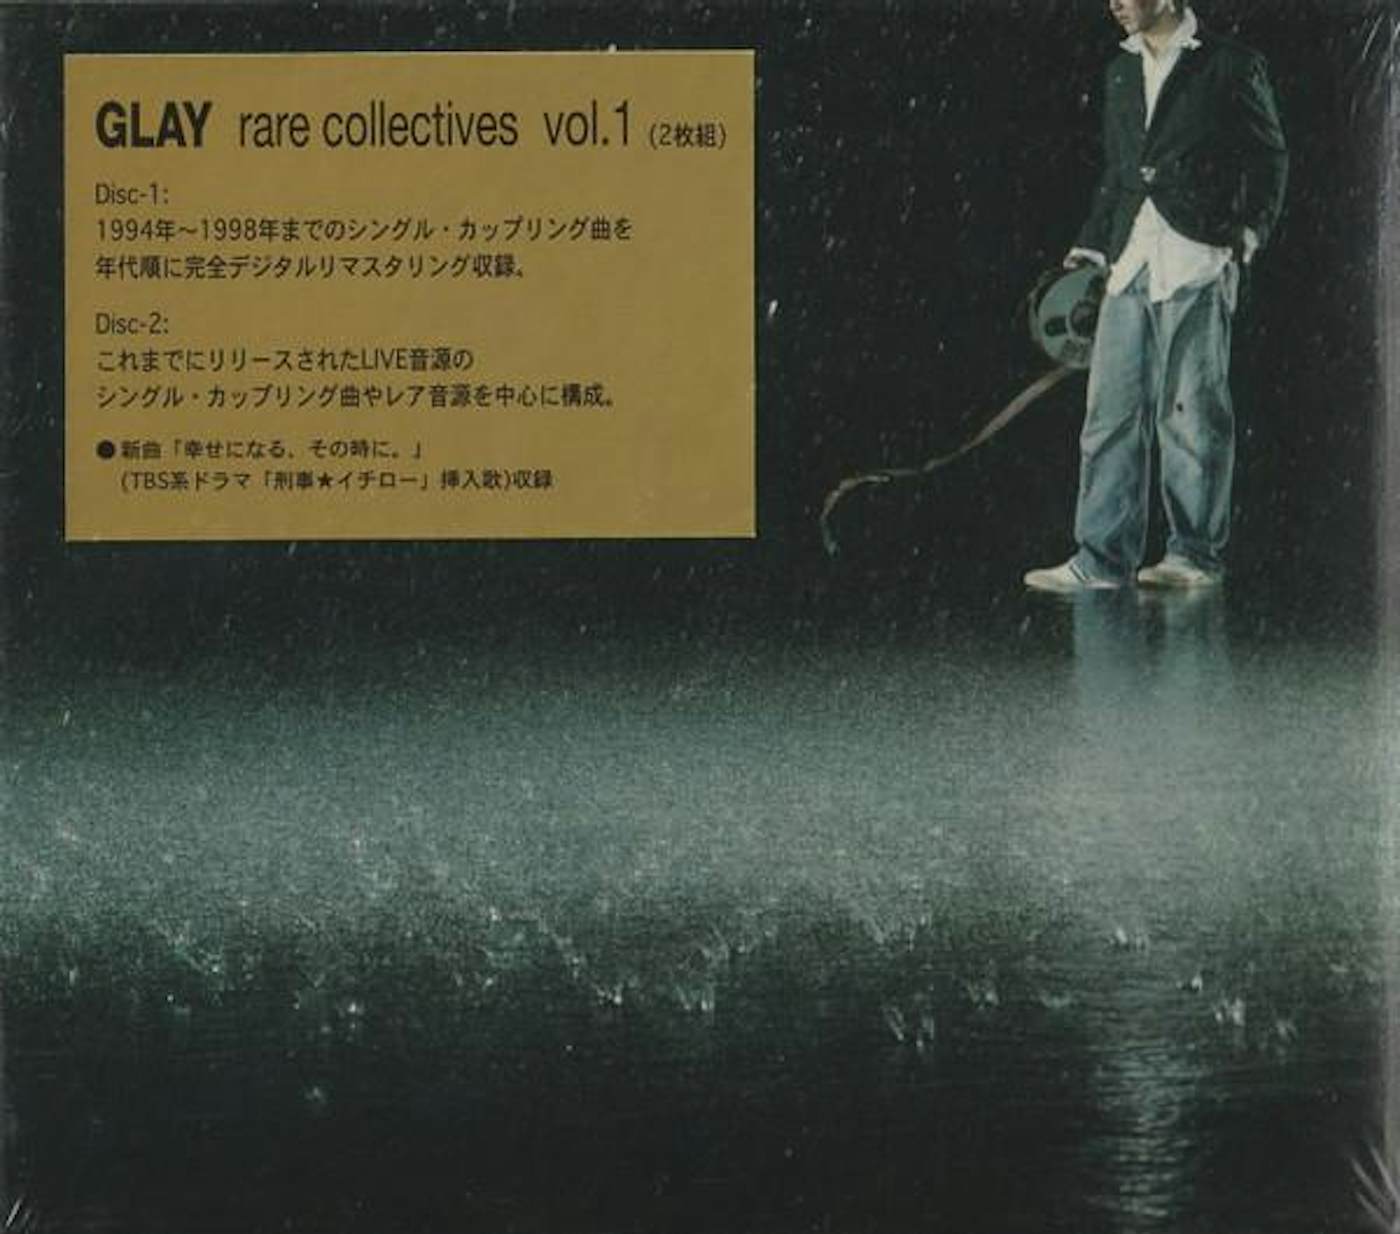 glay rare collectives 1 cd $20.49$18.49